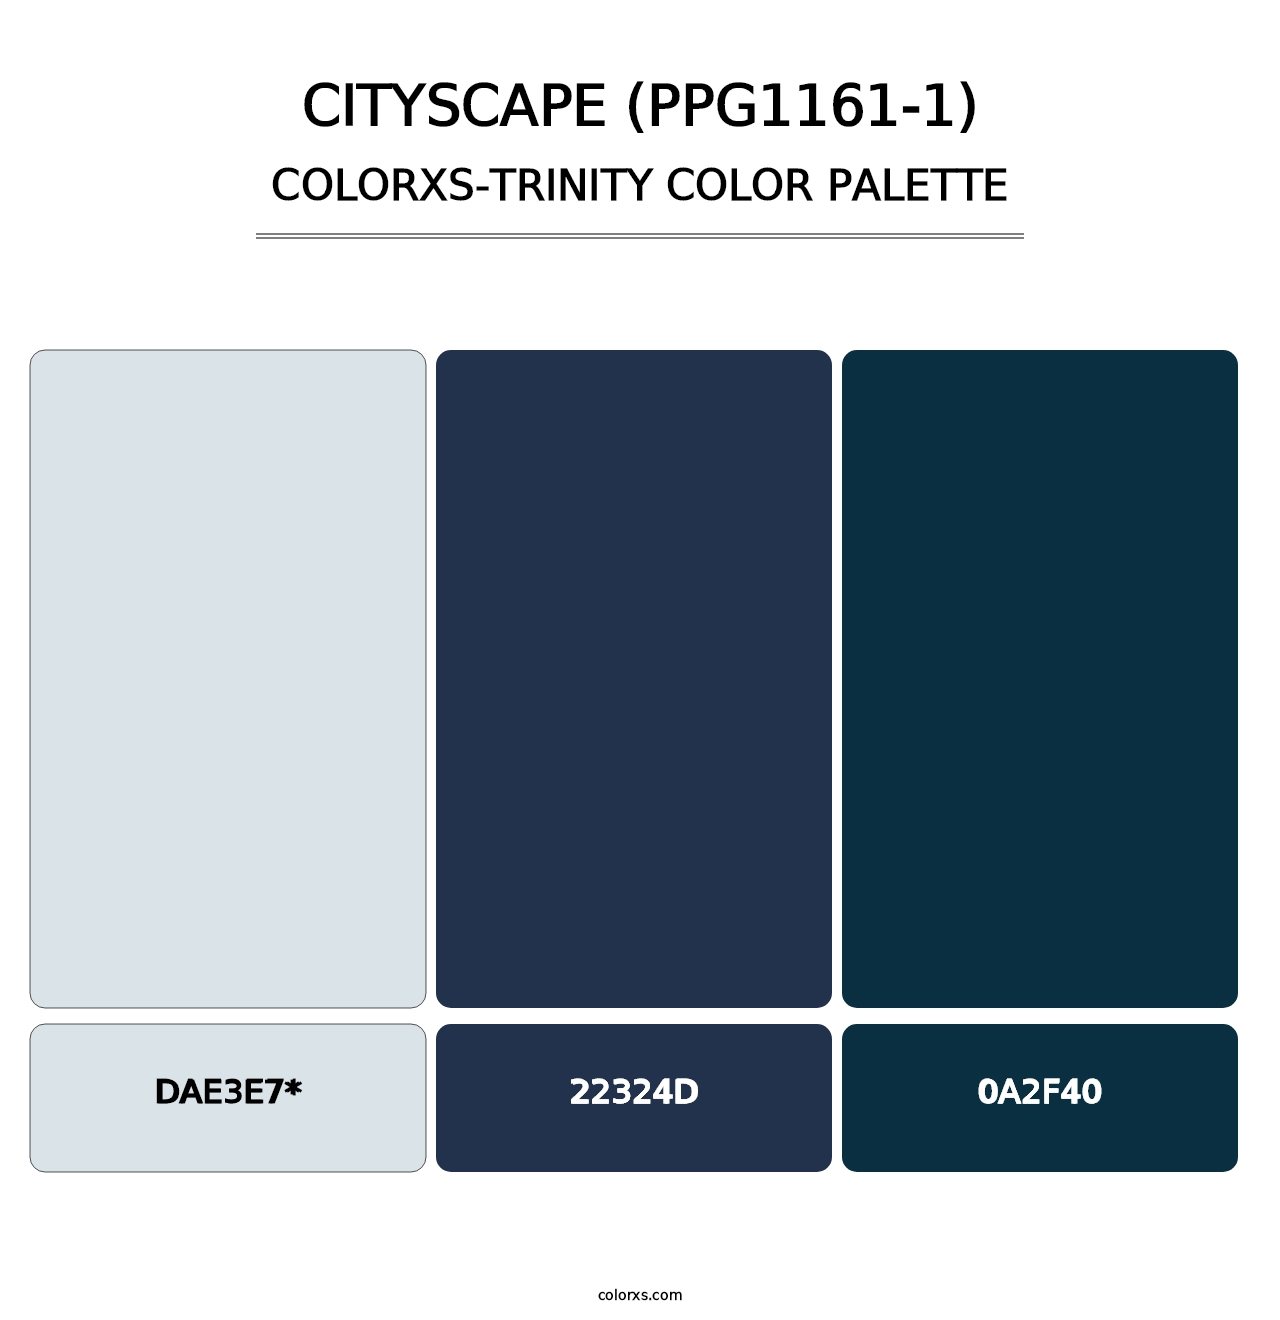 Cityscape (PPG1161-1) - Colorxs Trinity Palette